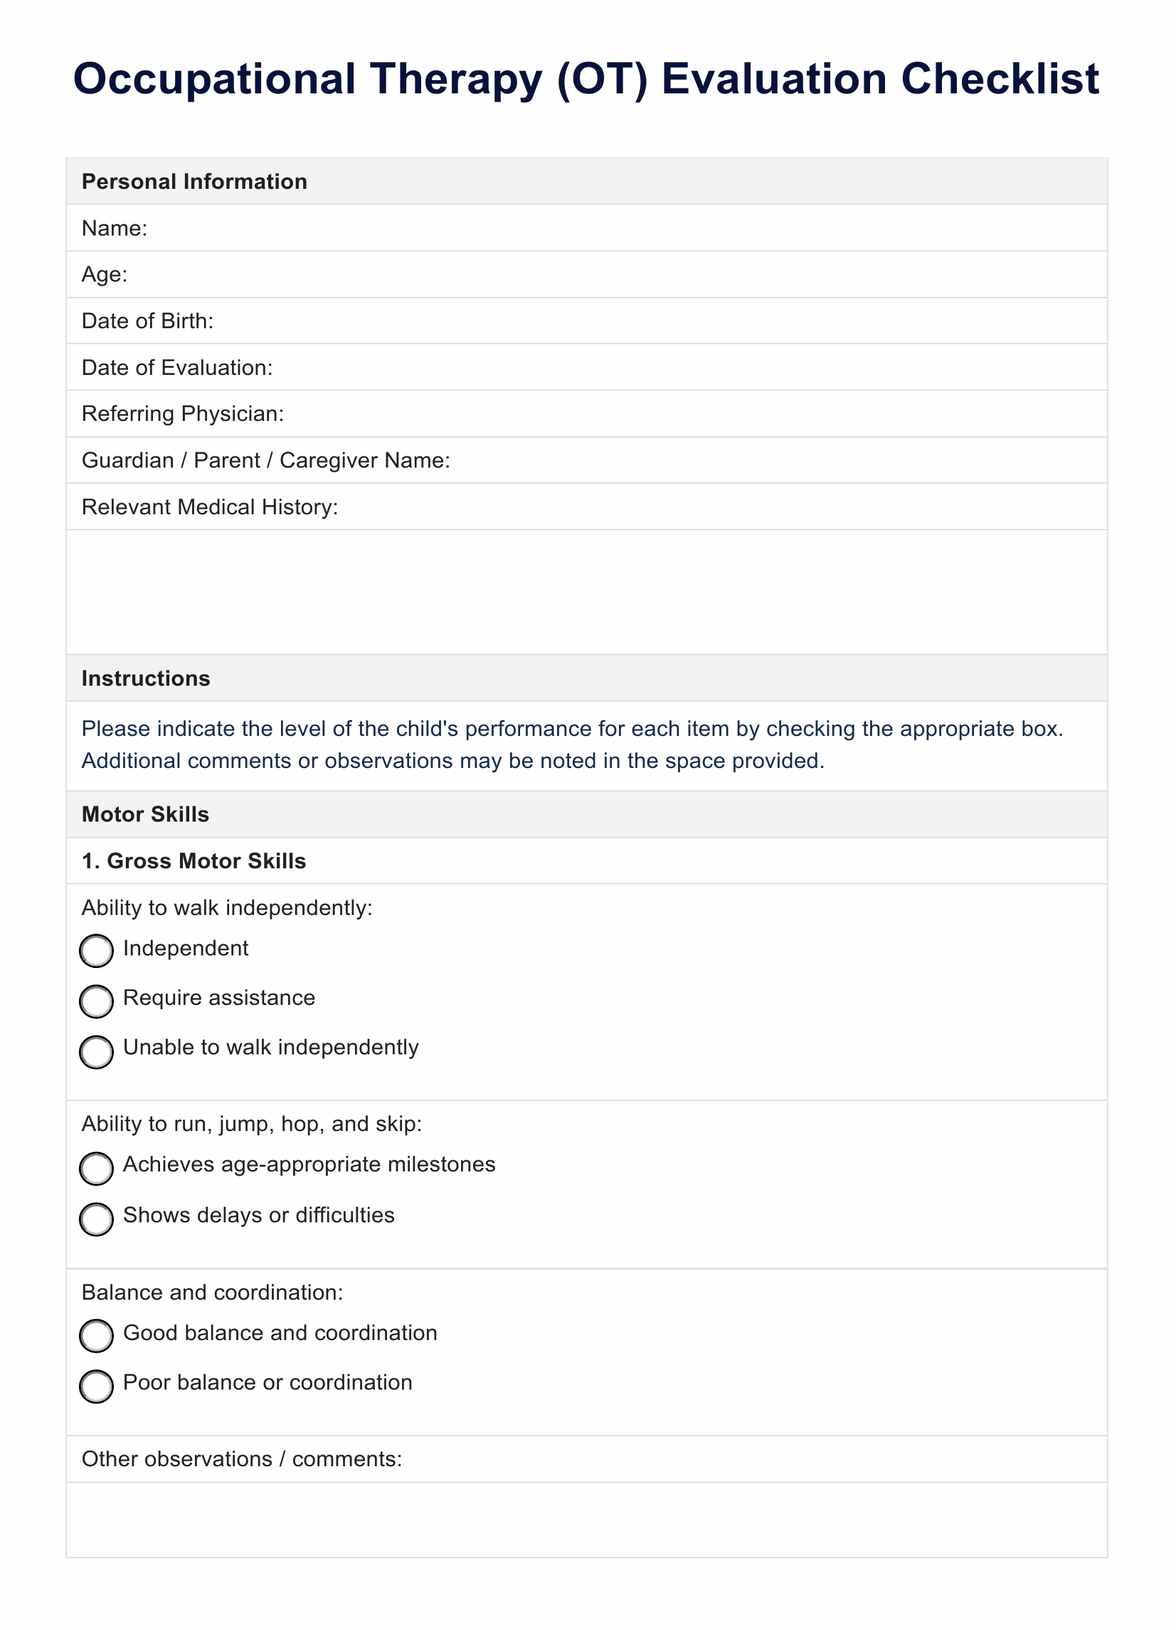 OT Evaluation Checklist PDF Example